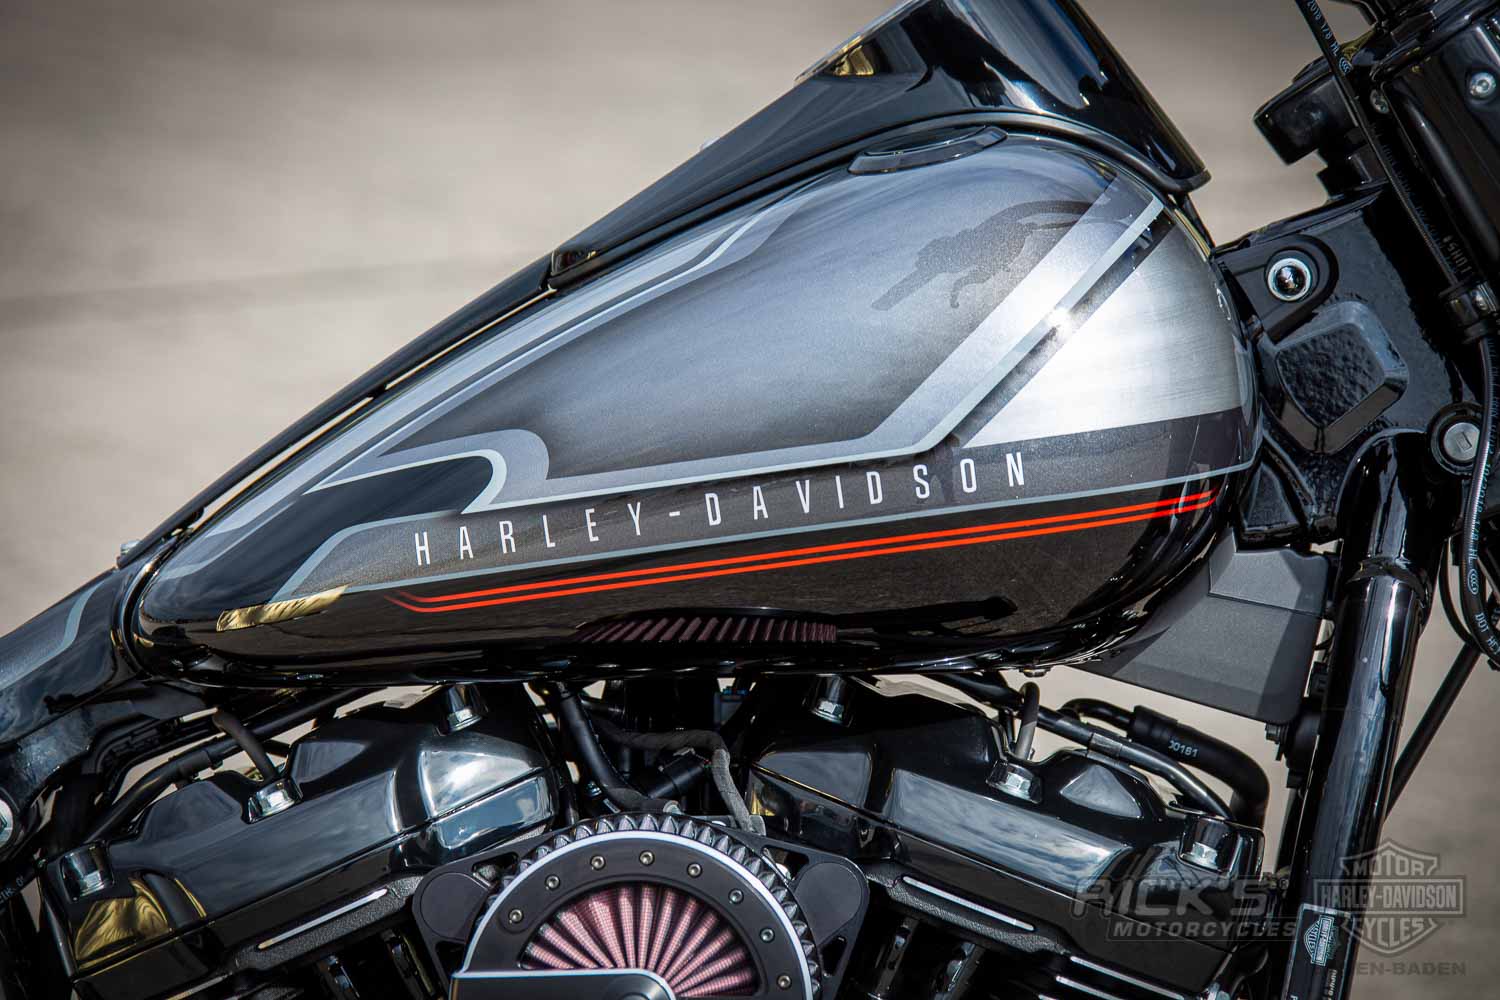 Harley Davidson FLSTF Fat Boy Custom Paint Set Real Fire Orange